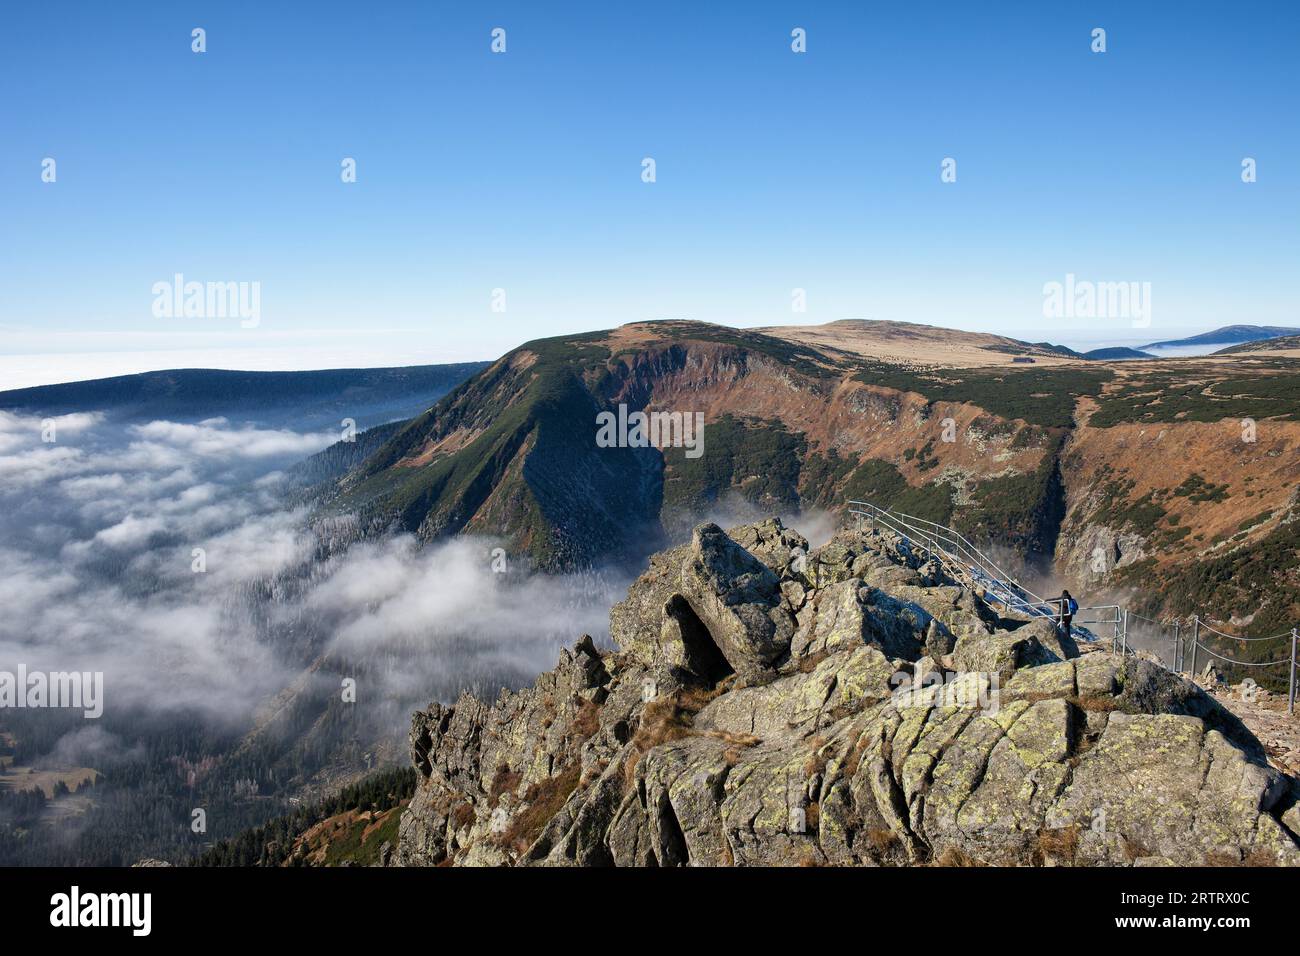 Poland and Czech Republic border, Sudetes, Karkonosze Mountains landscape, view from Sniezka Mountain Stock Photo